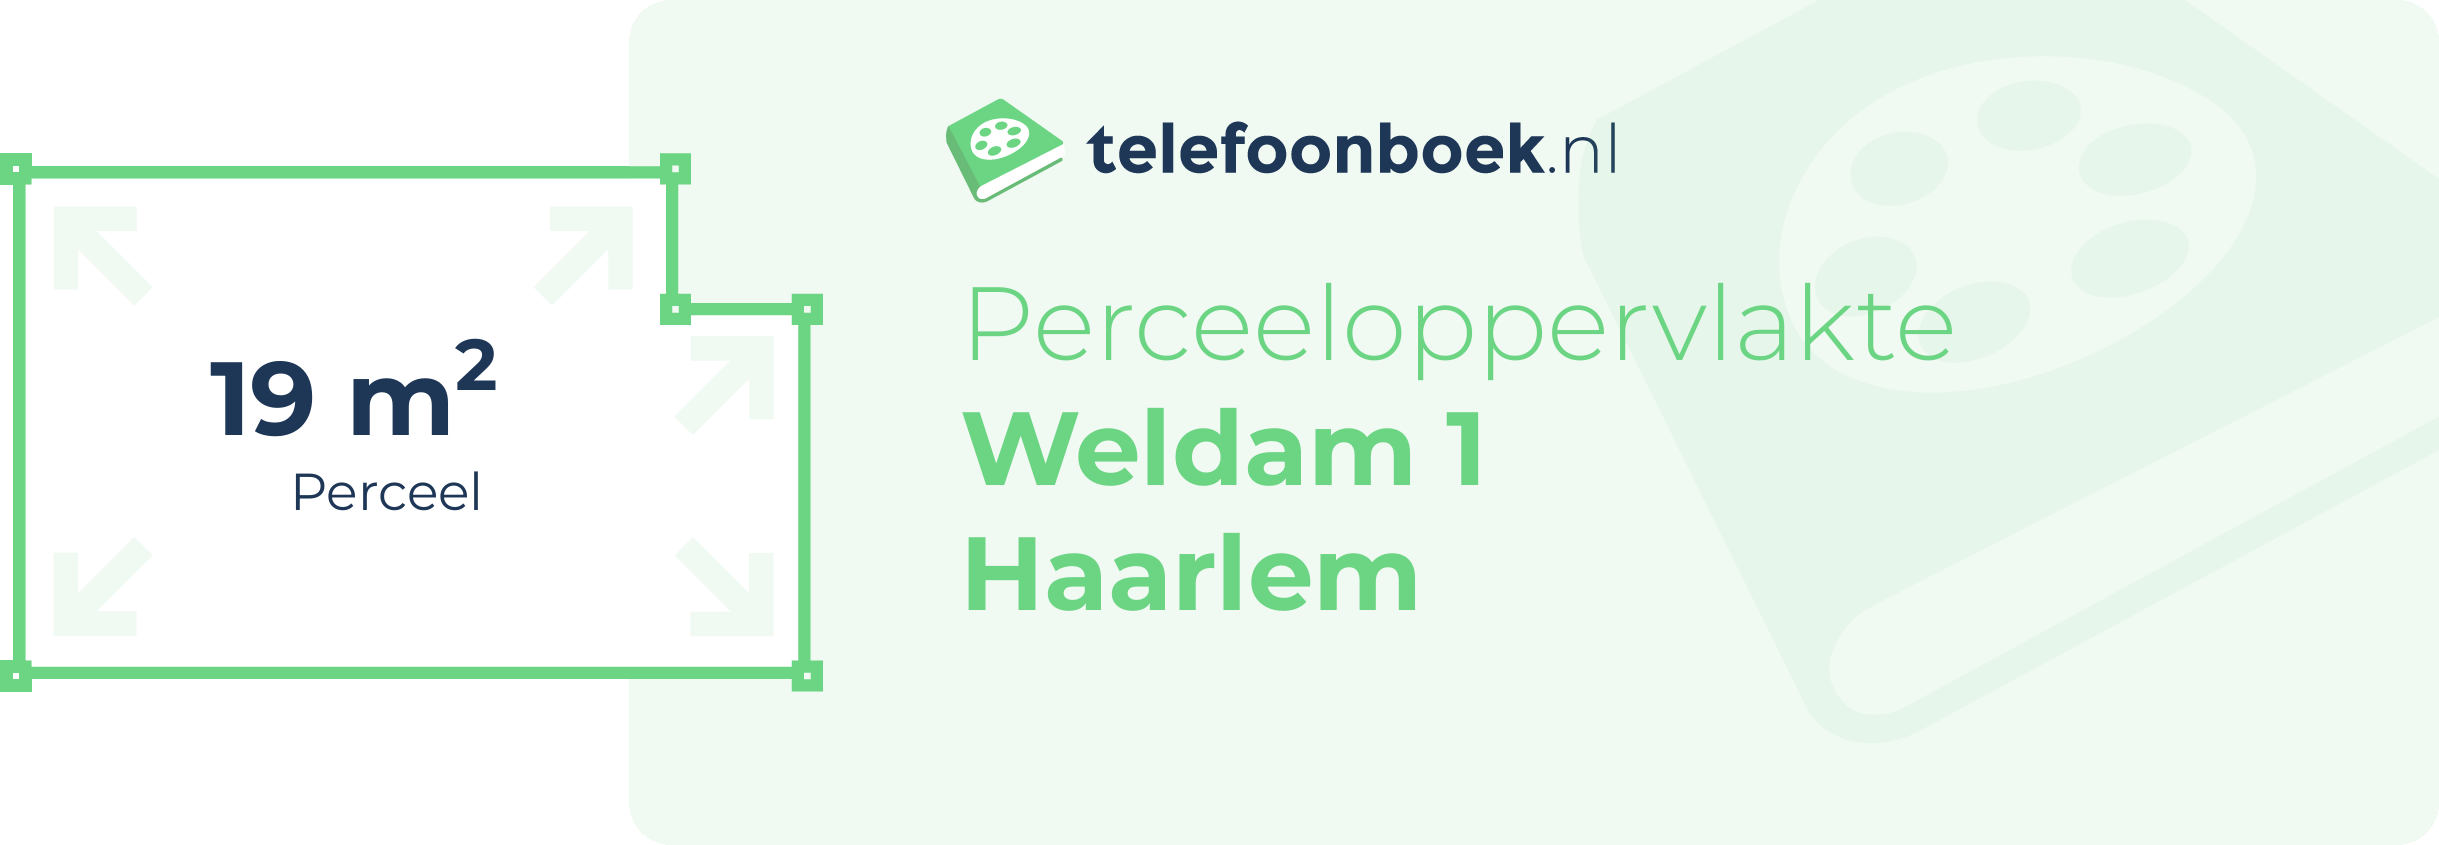 Perceeloppervlakte Weldam 1 Haarlem